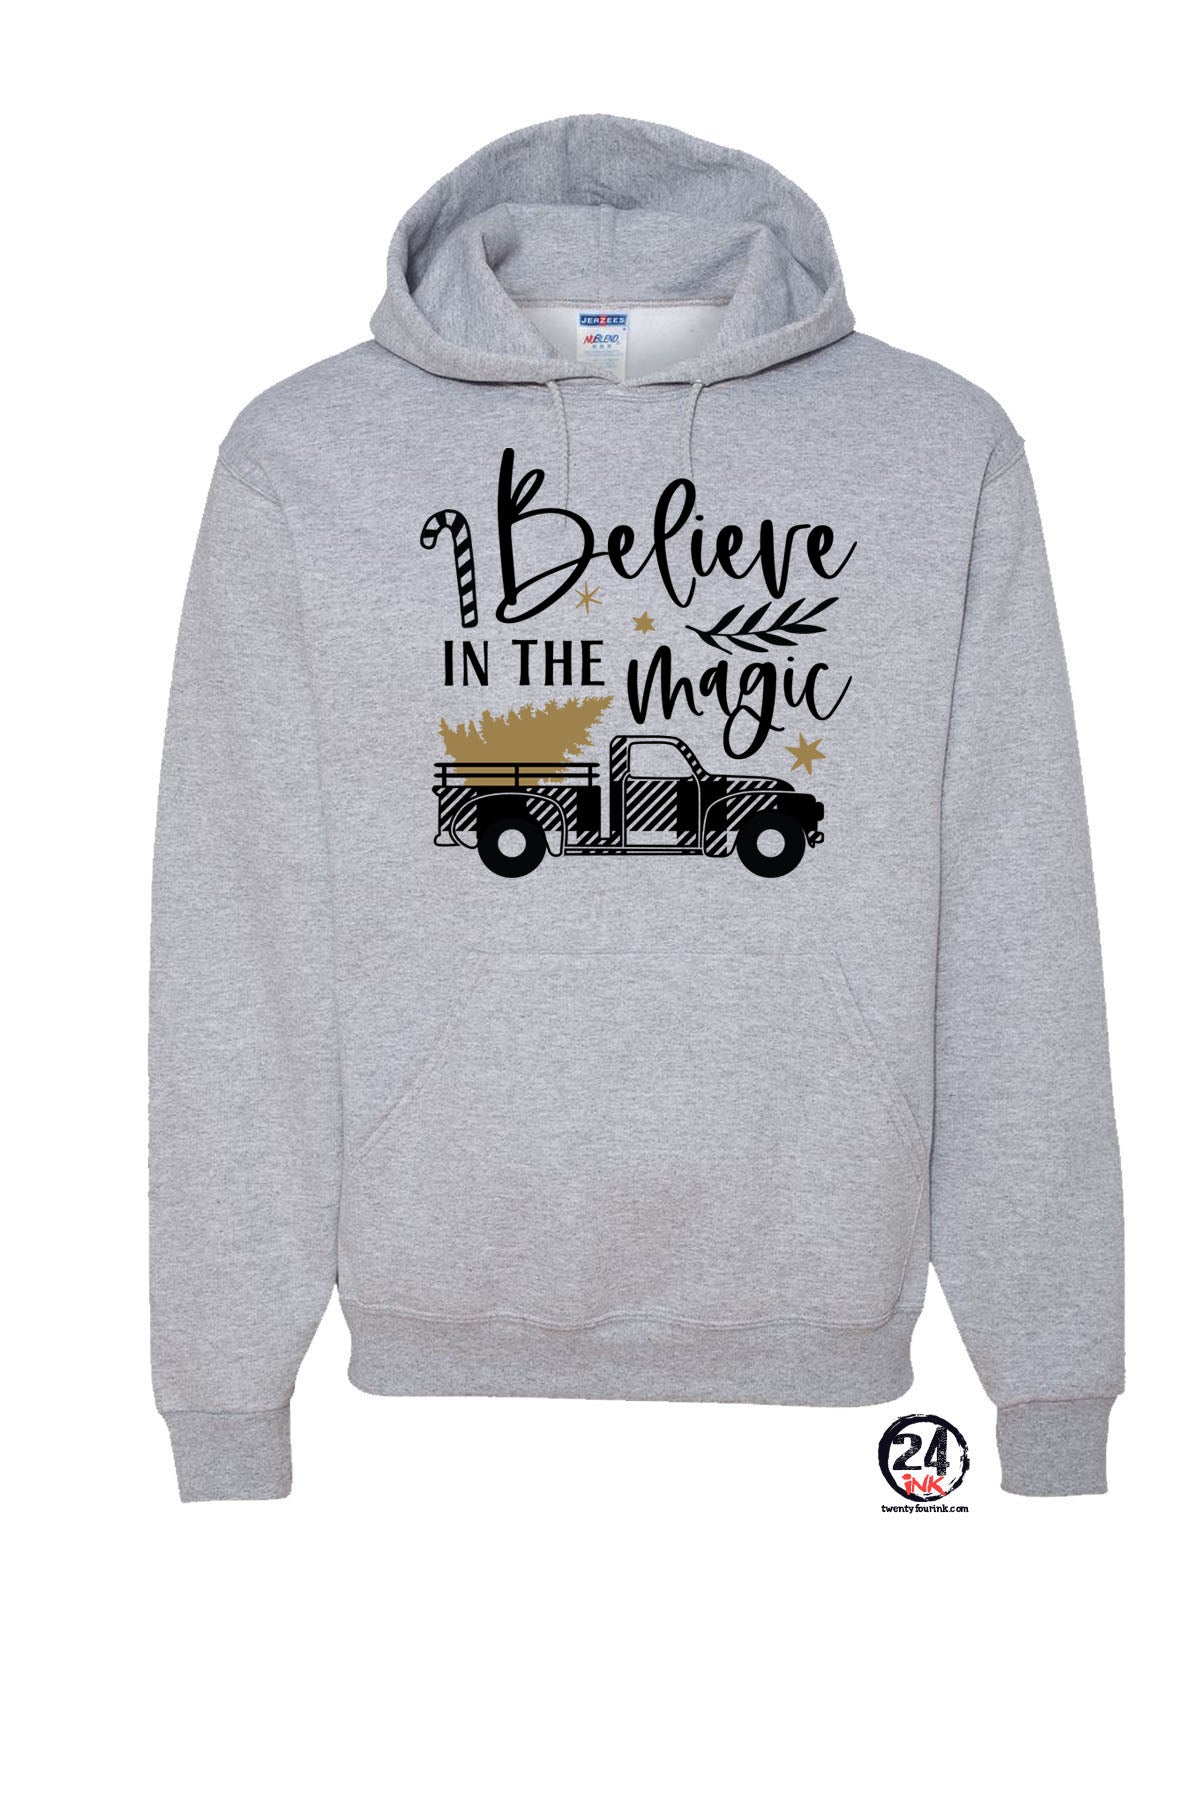 Believe in the Magic Hooded Sweatshirt